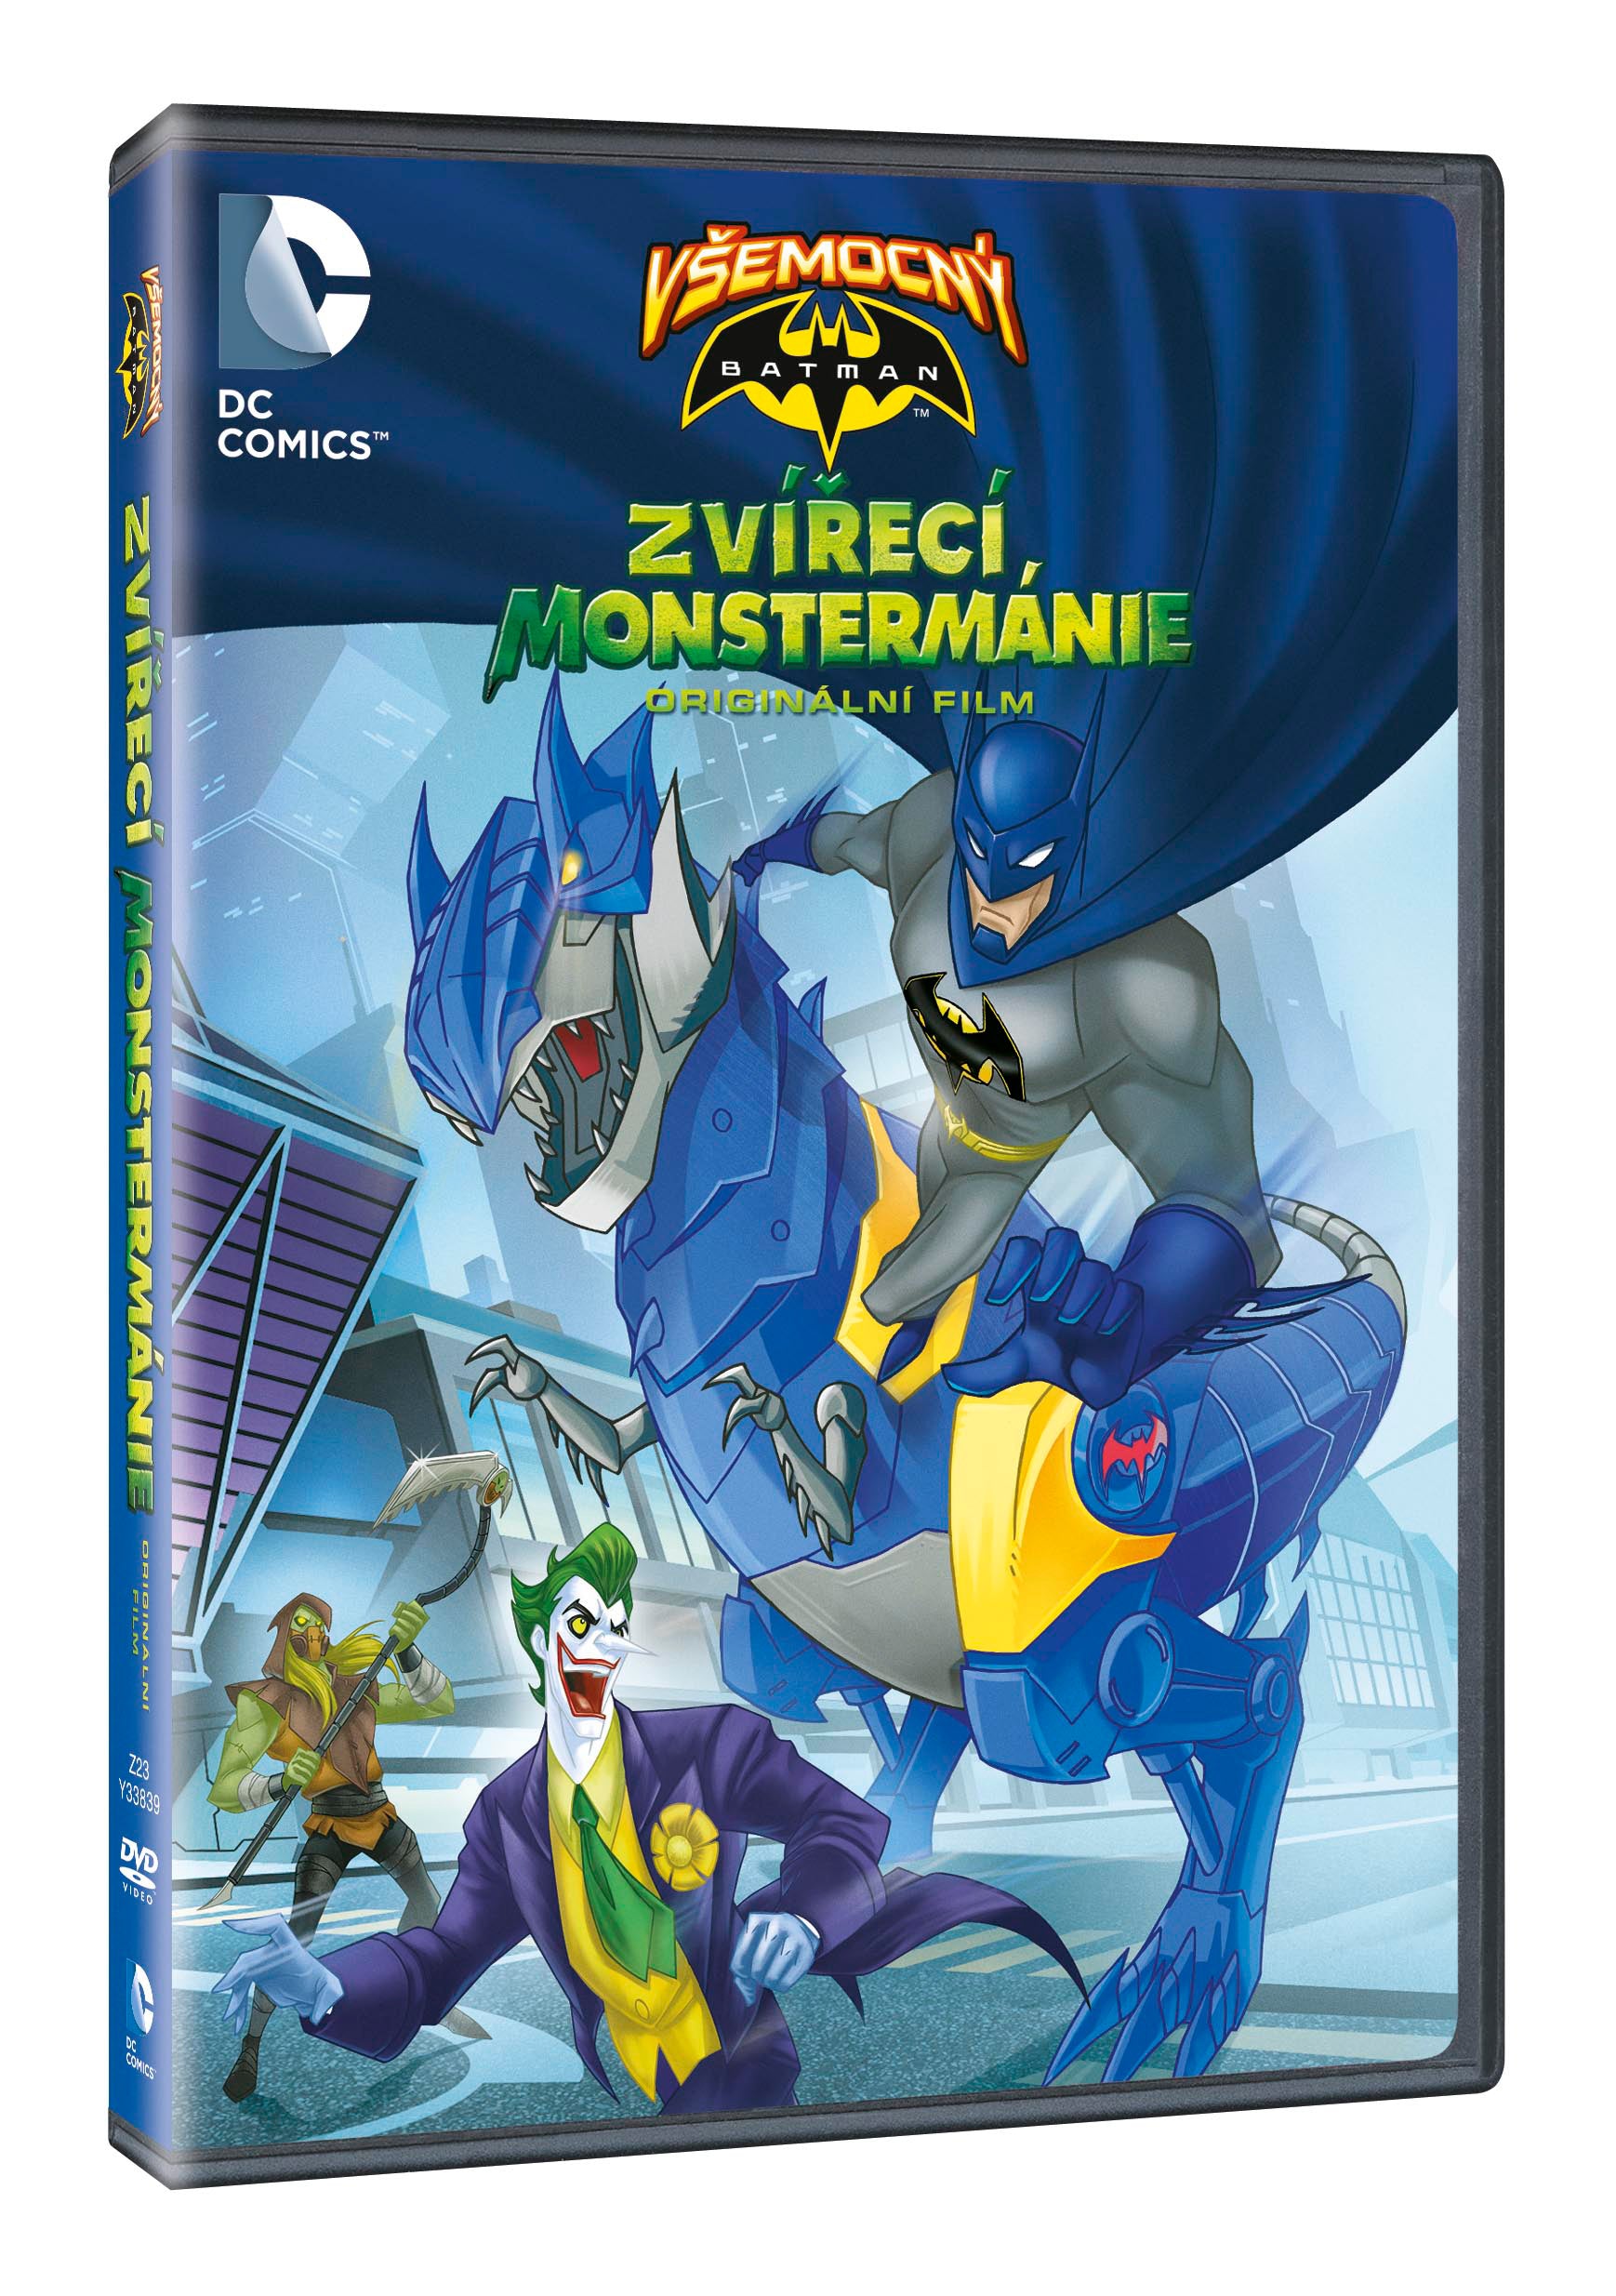 Vsemocny Batman: Zvireci Monstermanie DVD / Batman Unlimited: Animal Monstermania